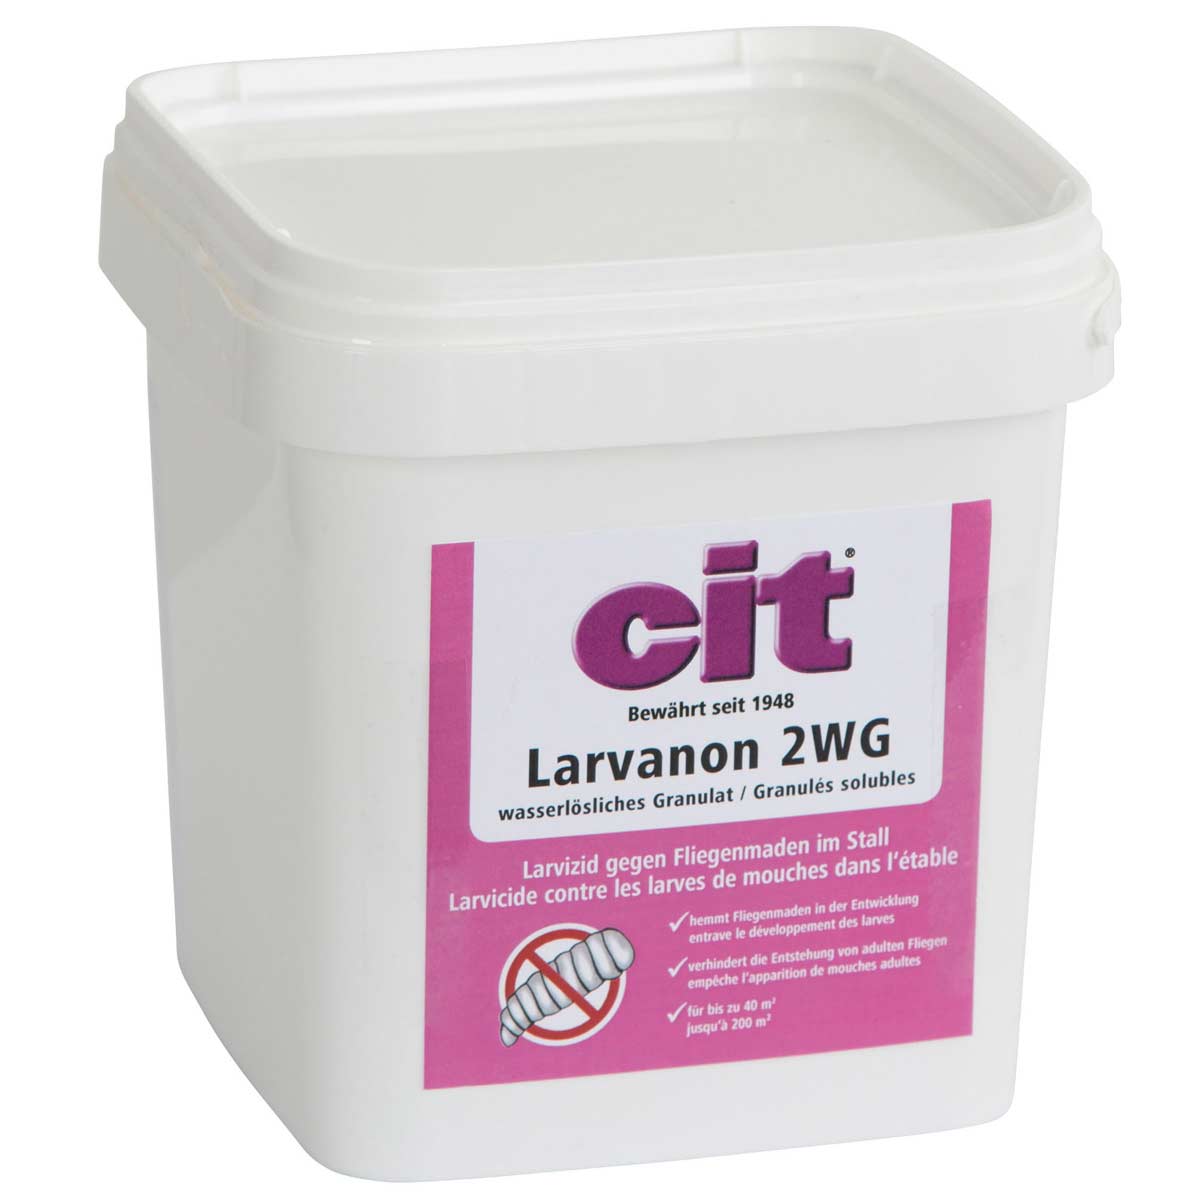 Cit Larvizid Larvanon 2 WG wasserlösliches Granulat 1 kg